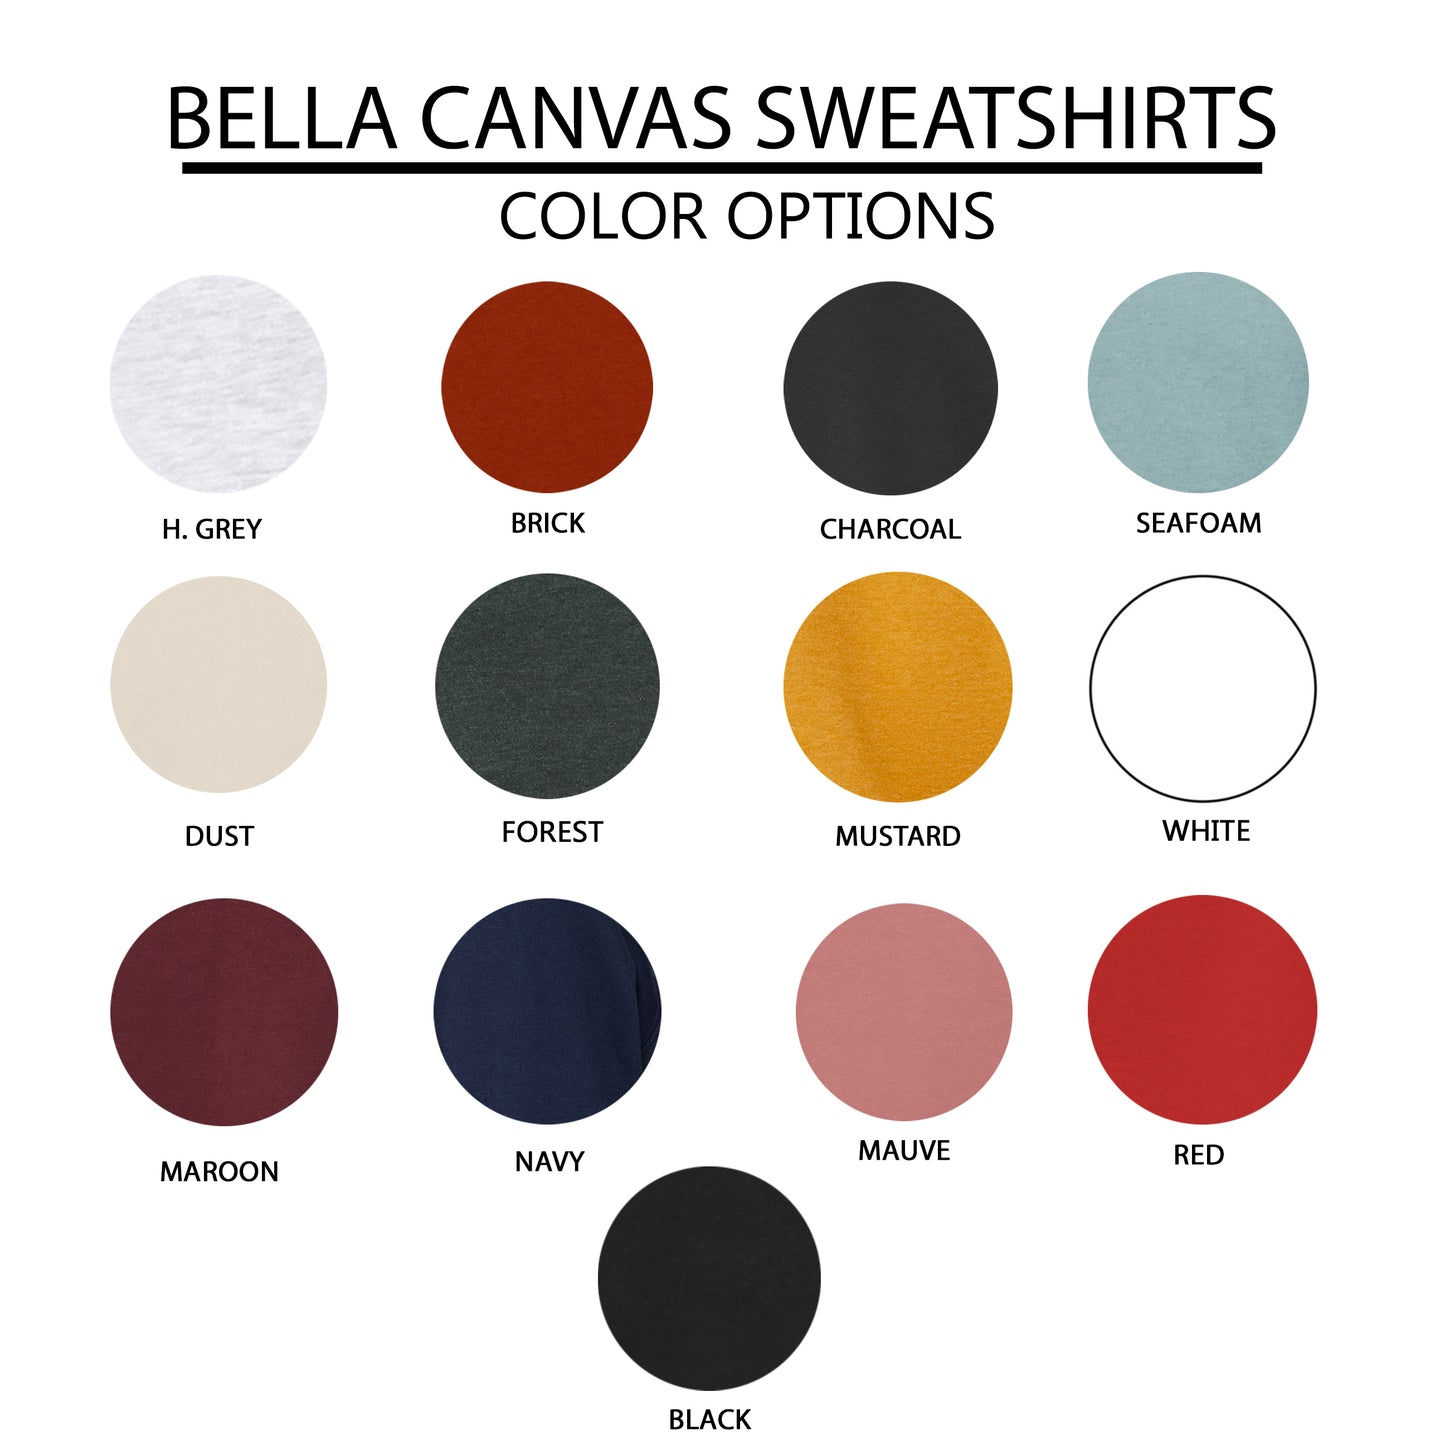 Be Done In Love |  Bella Canvas Premium Sweatshirt